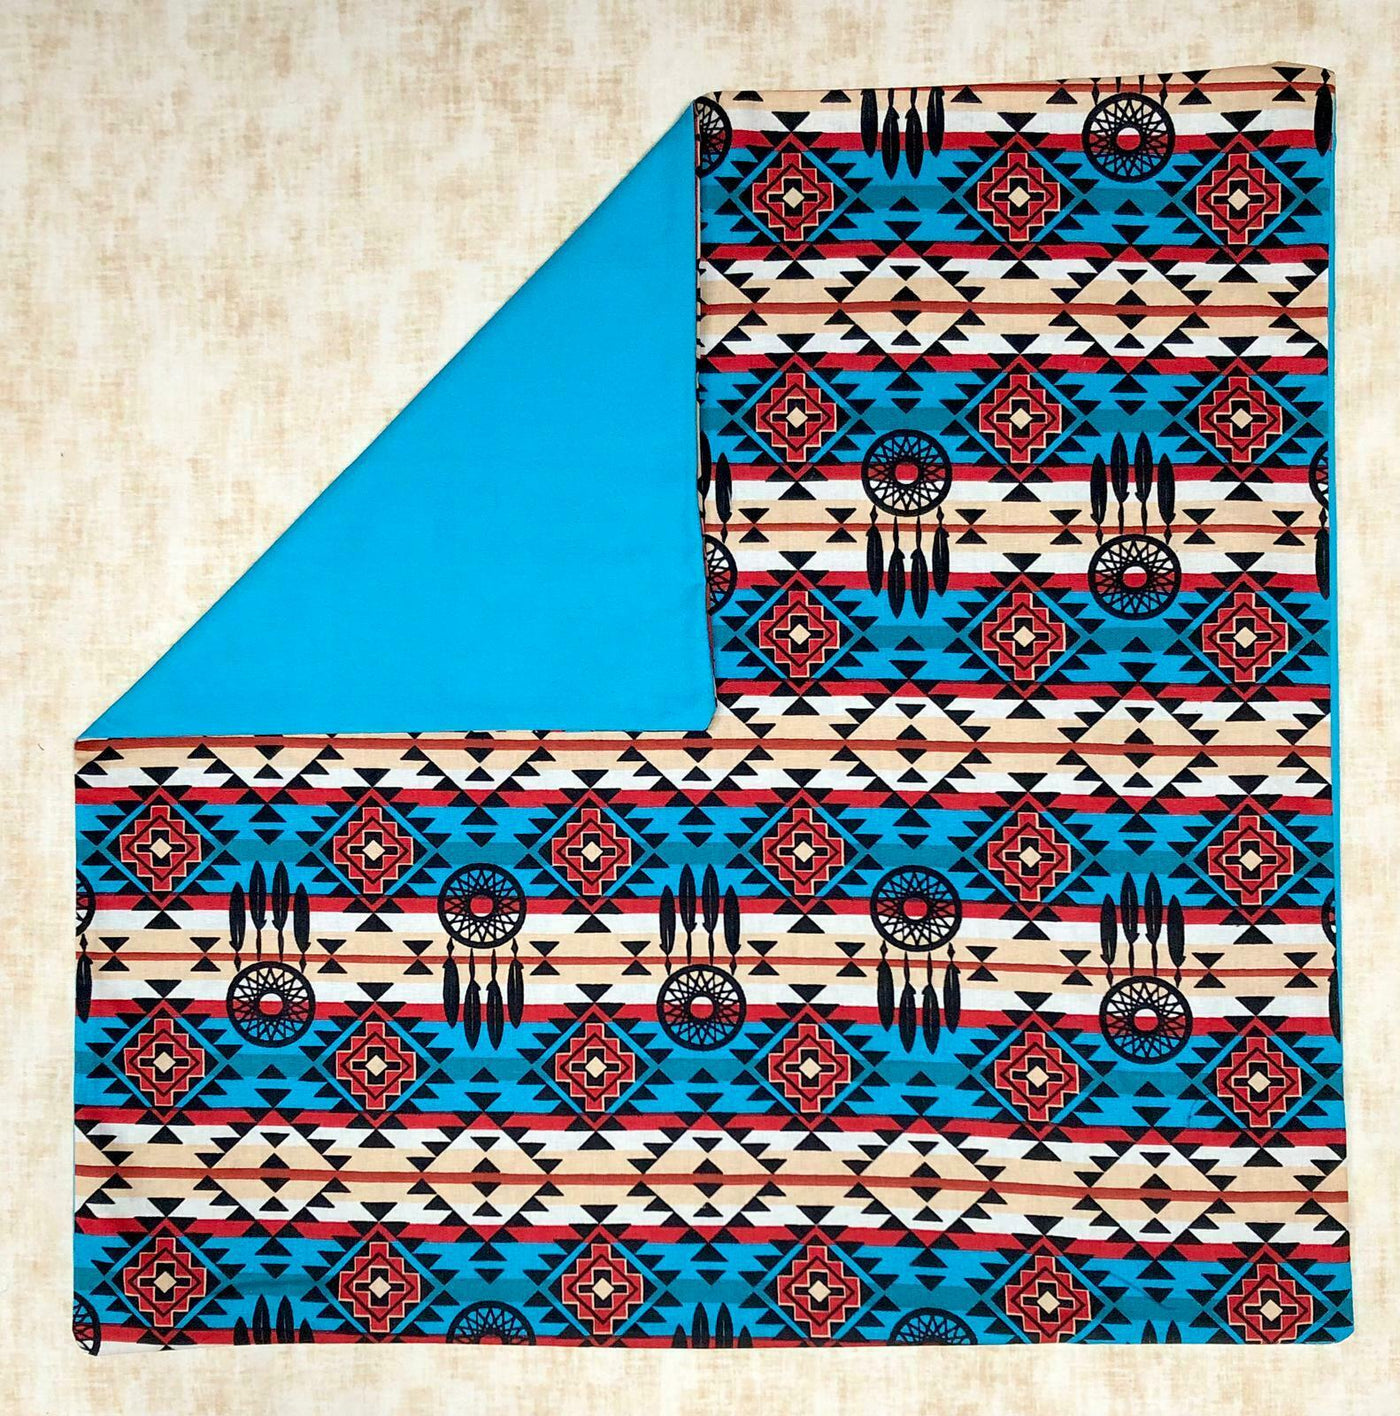 Dreamcatcher Navajo Aztec Influenced Cushion Cover Case fits 18"x18" 100% Cotton